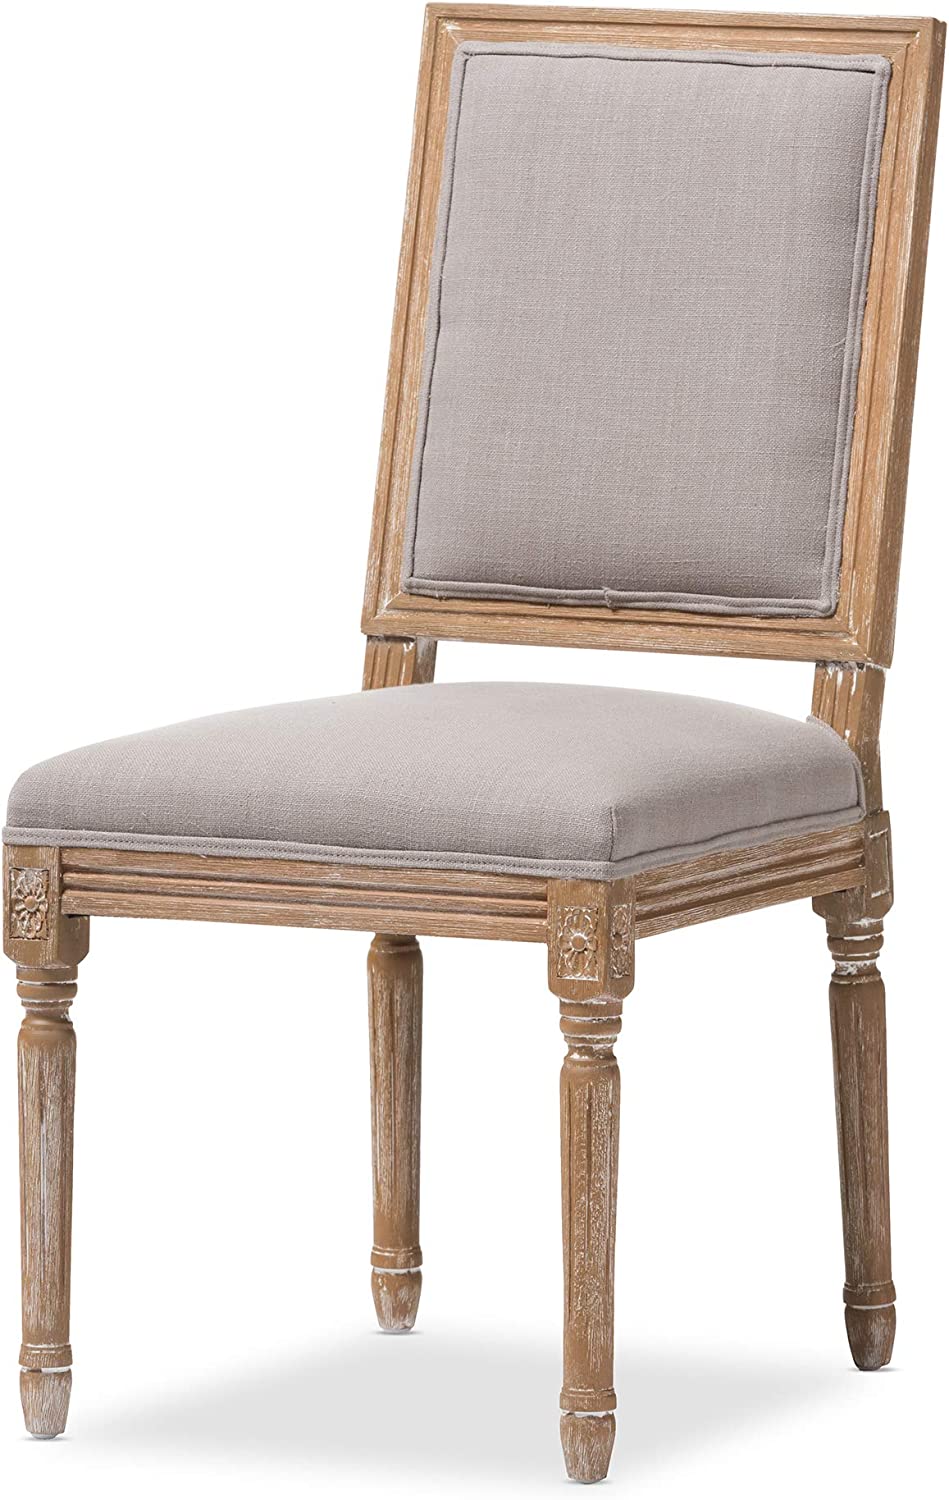 Baxton Studio Clairette Beige Linen French Style Natural Oak Wood Accent Chair